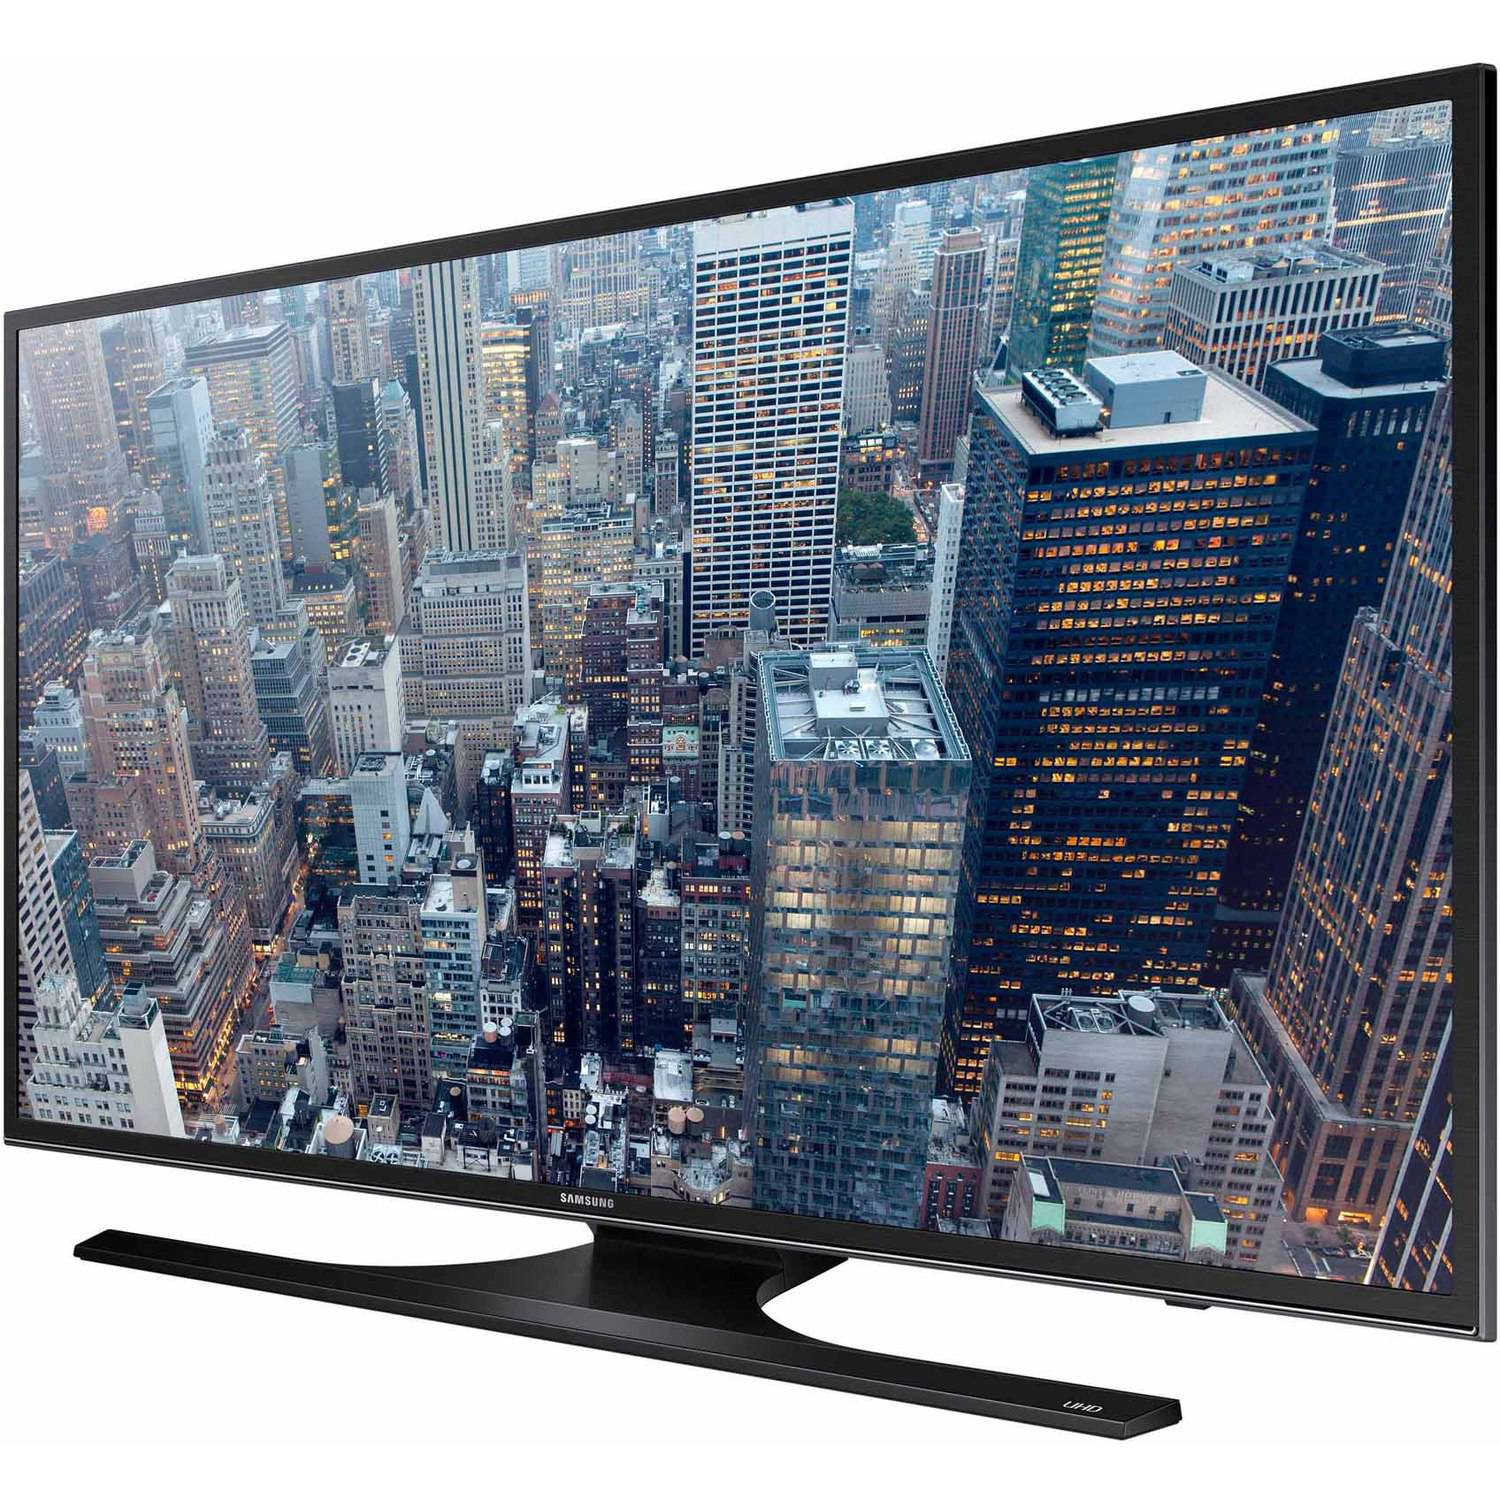 Samsung UN55JU6500 55" 4K Ultra HD 2160p 60Hz LED Smart HDTV (4K x 2K) - Qualifies for Premium Delivery - image 4 of 10